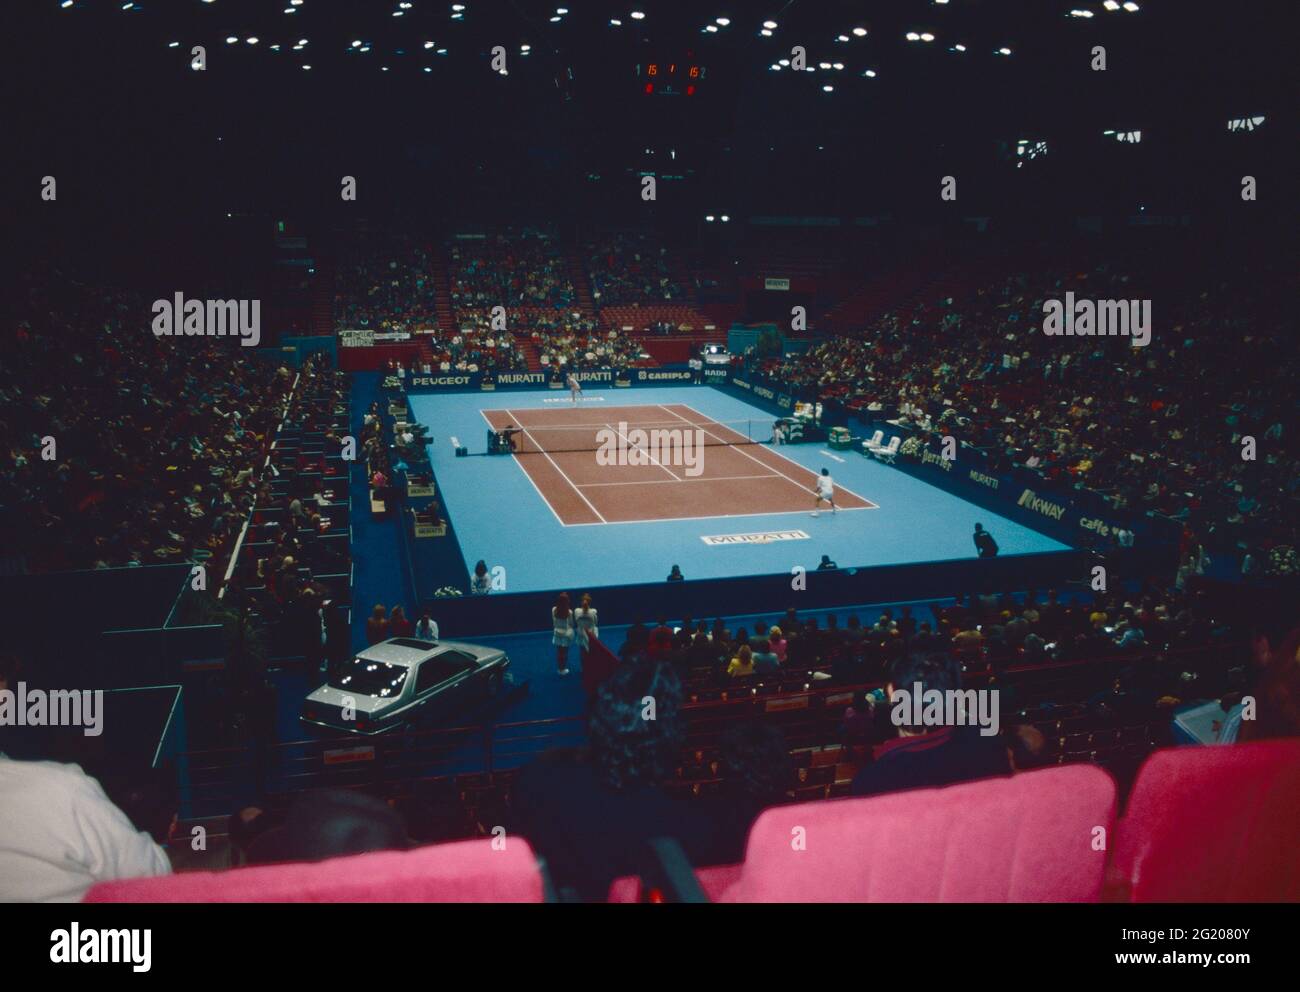 View of the Muratti Indoor tennis tournament, Forum Assago, Italy 1991 Stock Photo